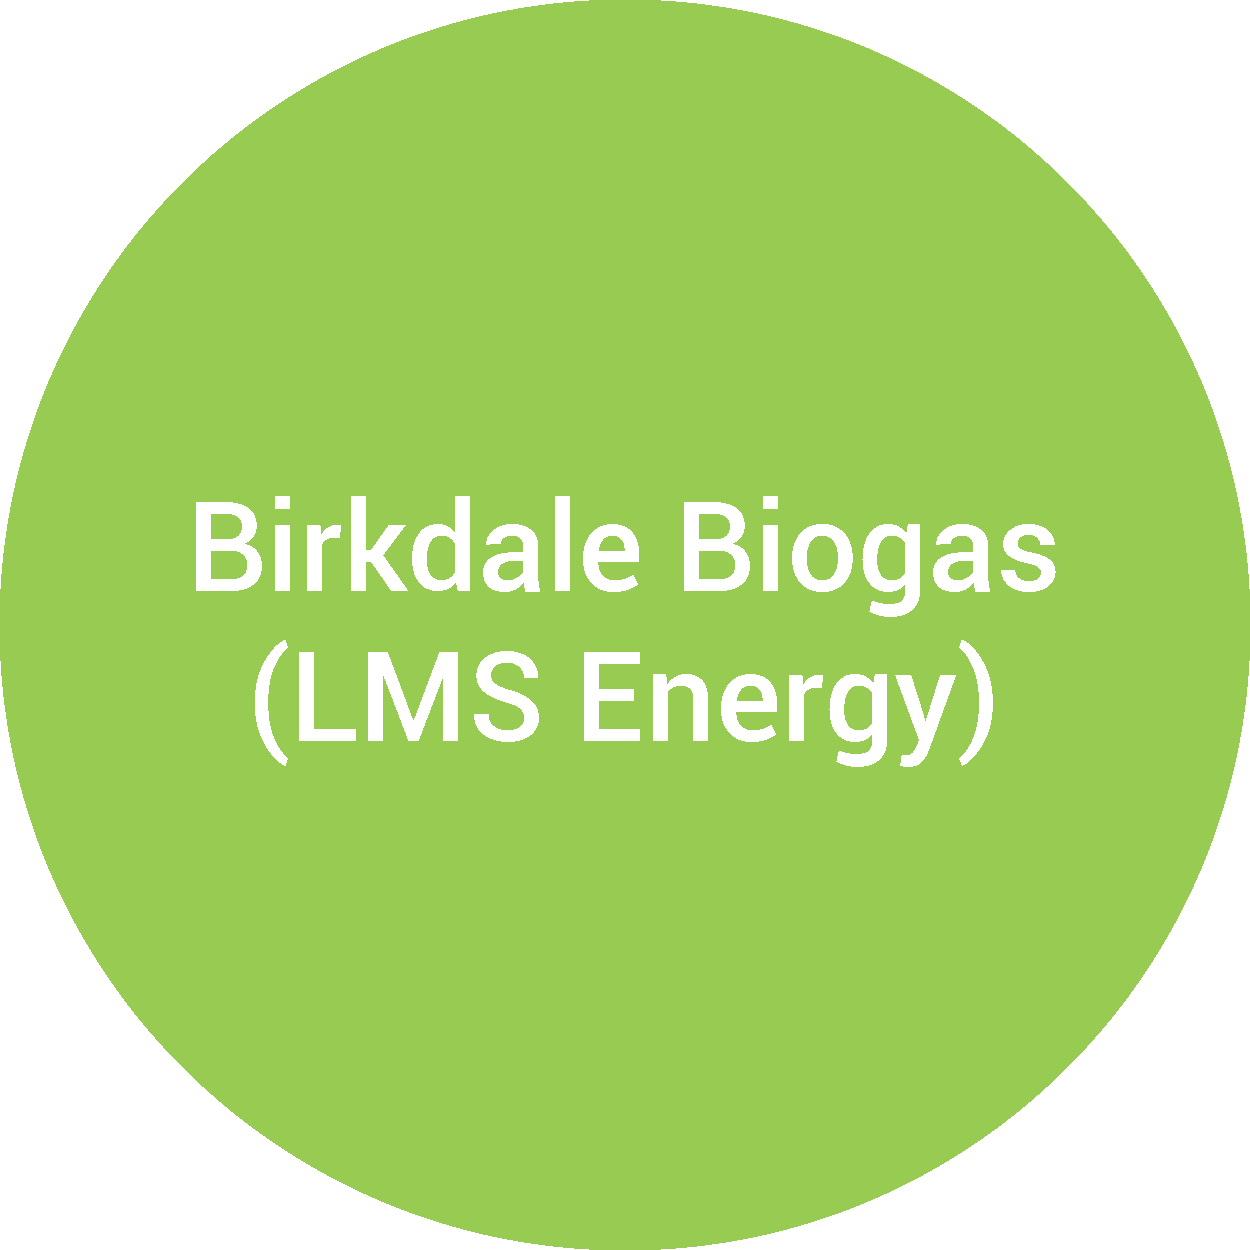 Birkdale Biogas (LMS Energy)